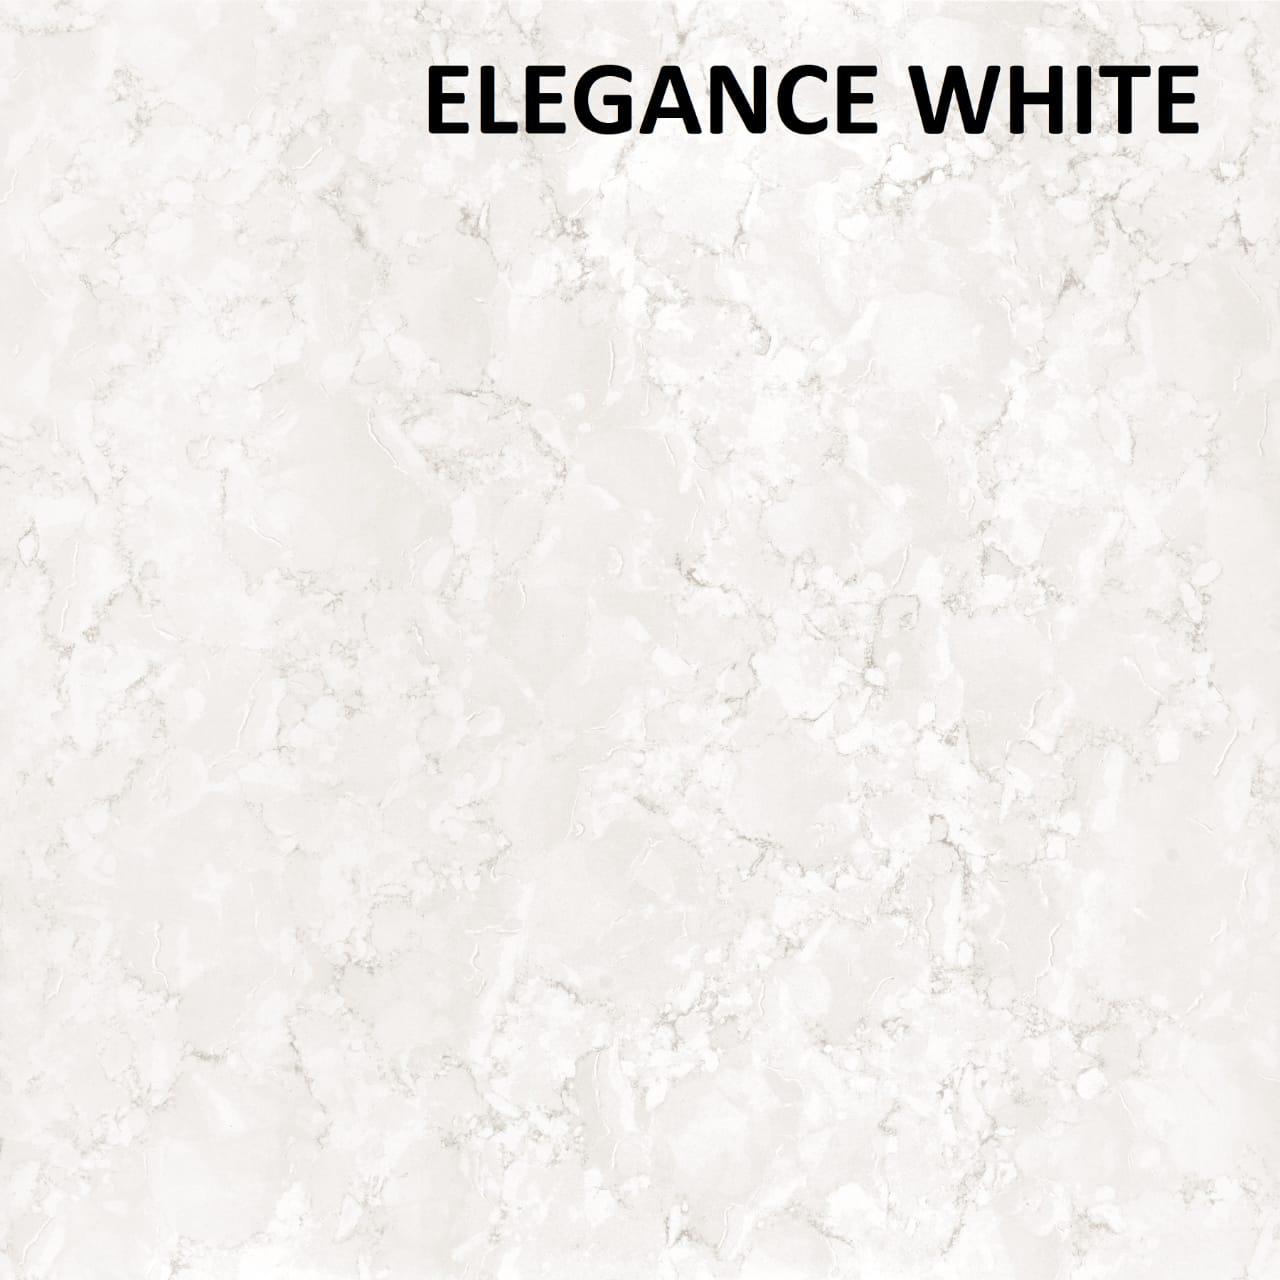 Elegance White